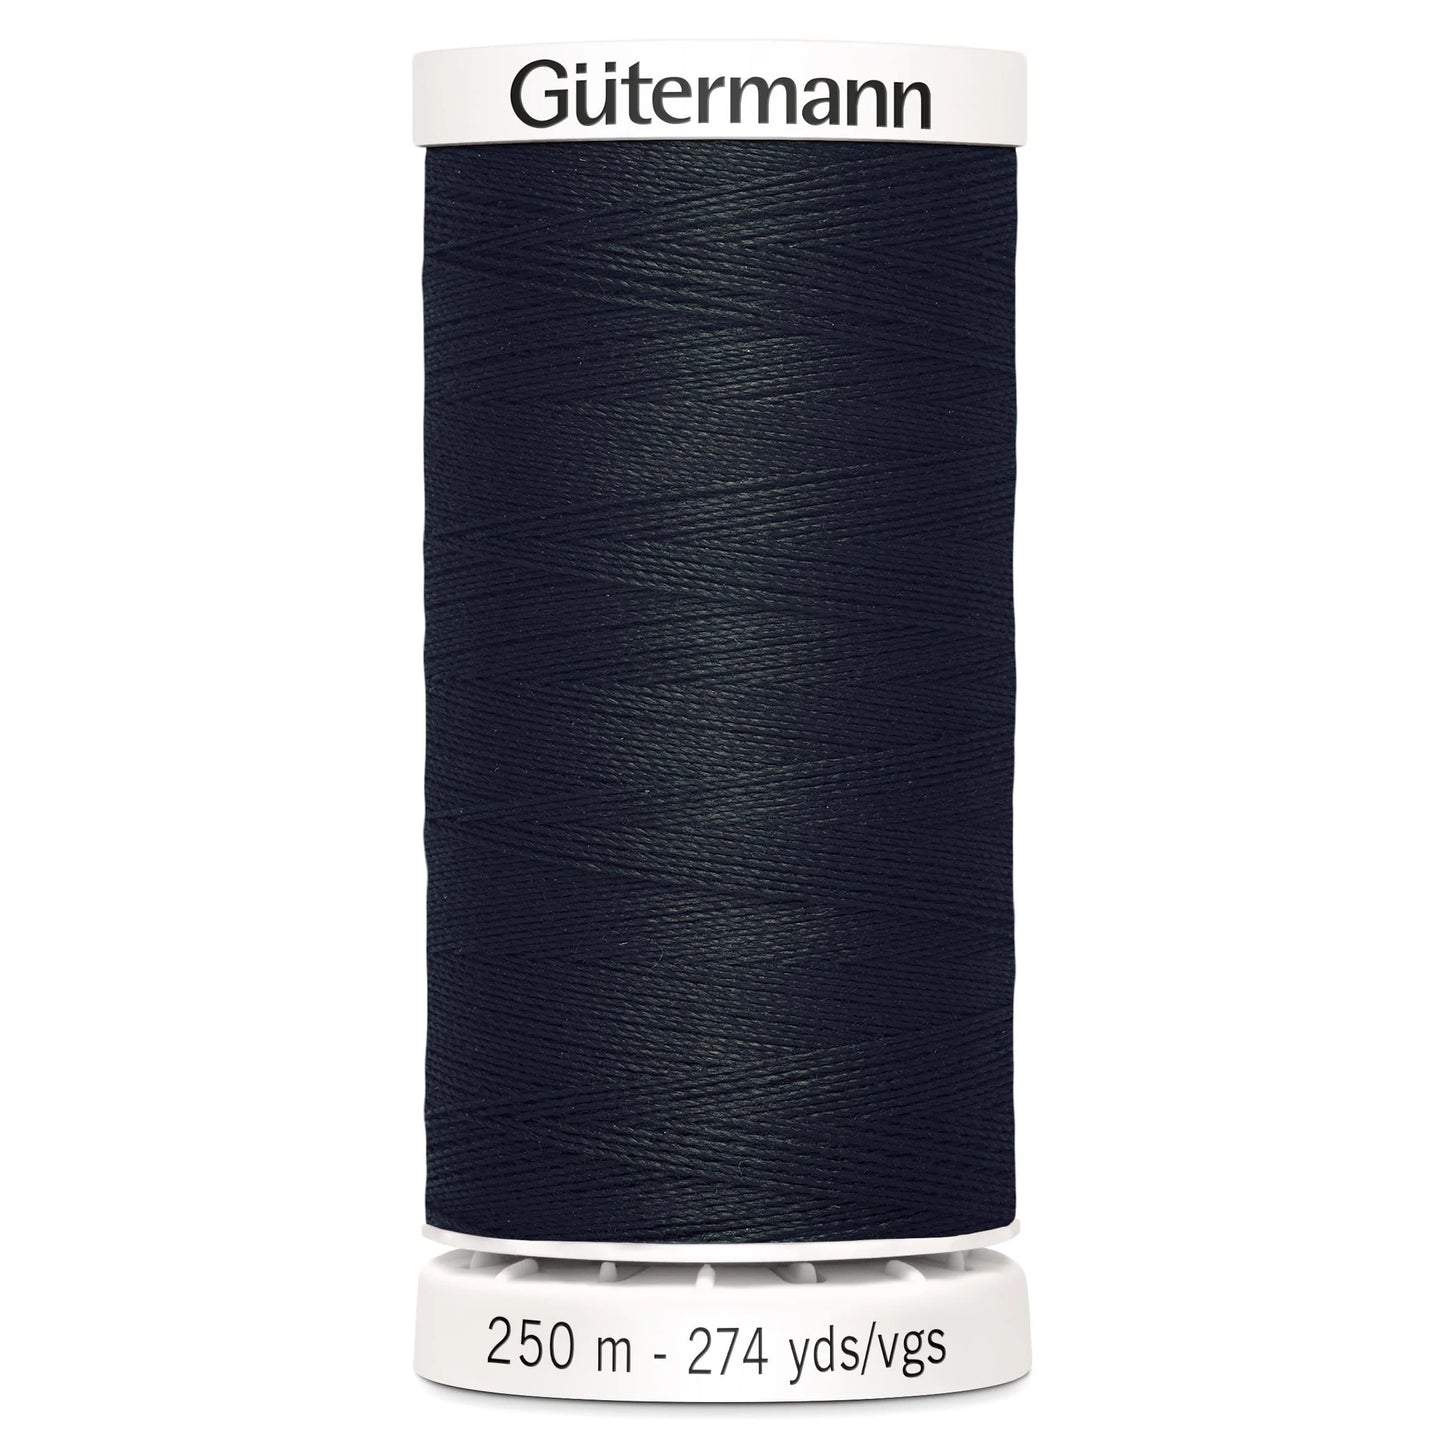 000 Gutermann Sew All 250m - Black